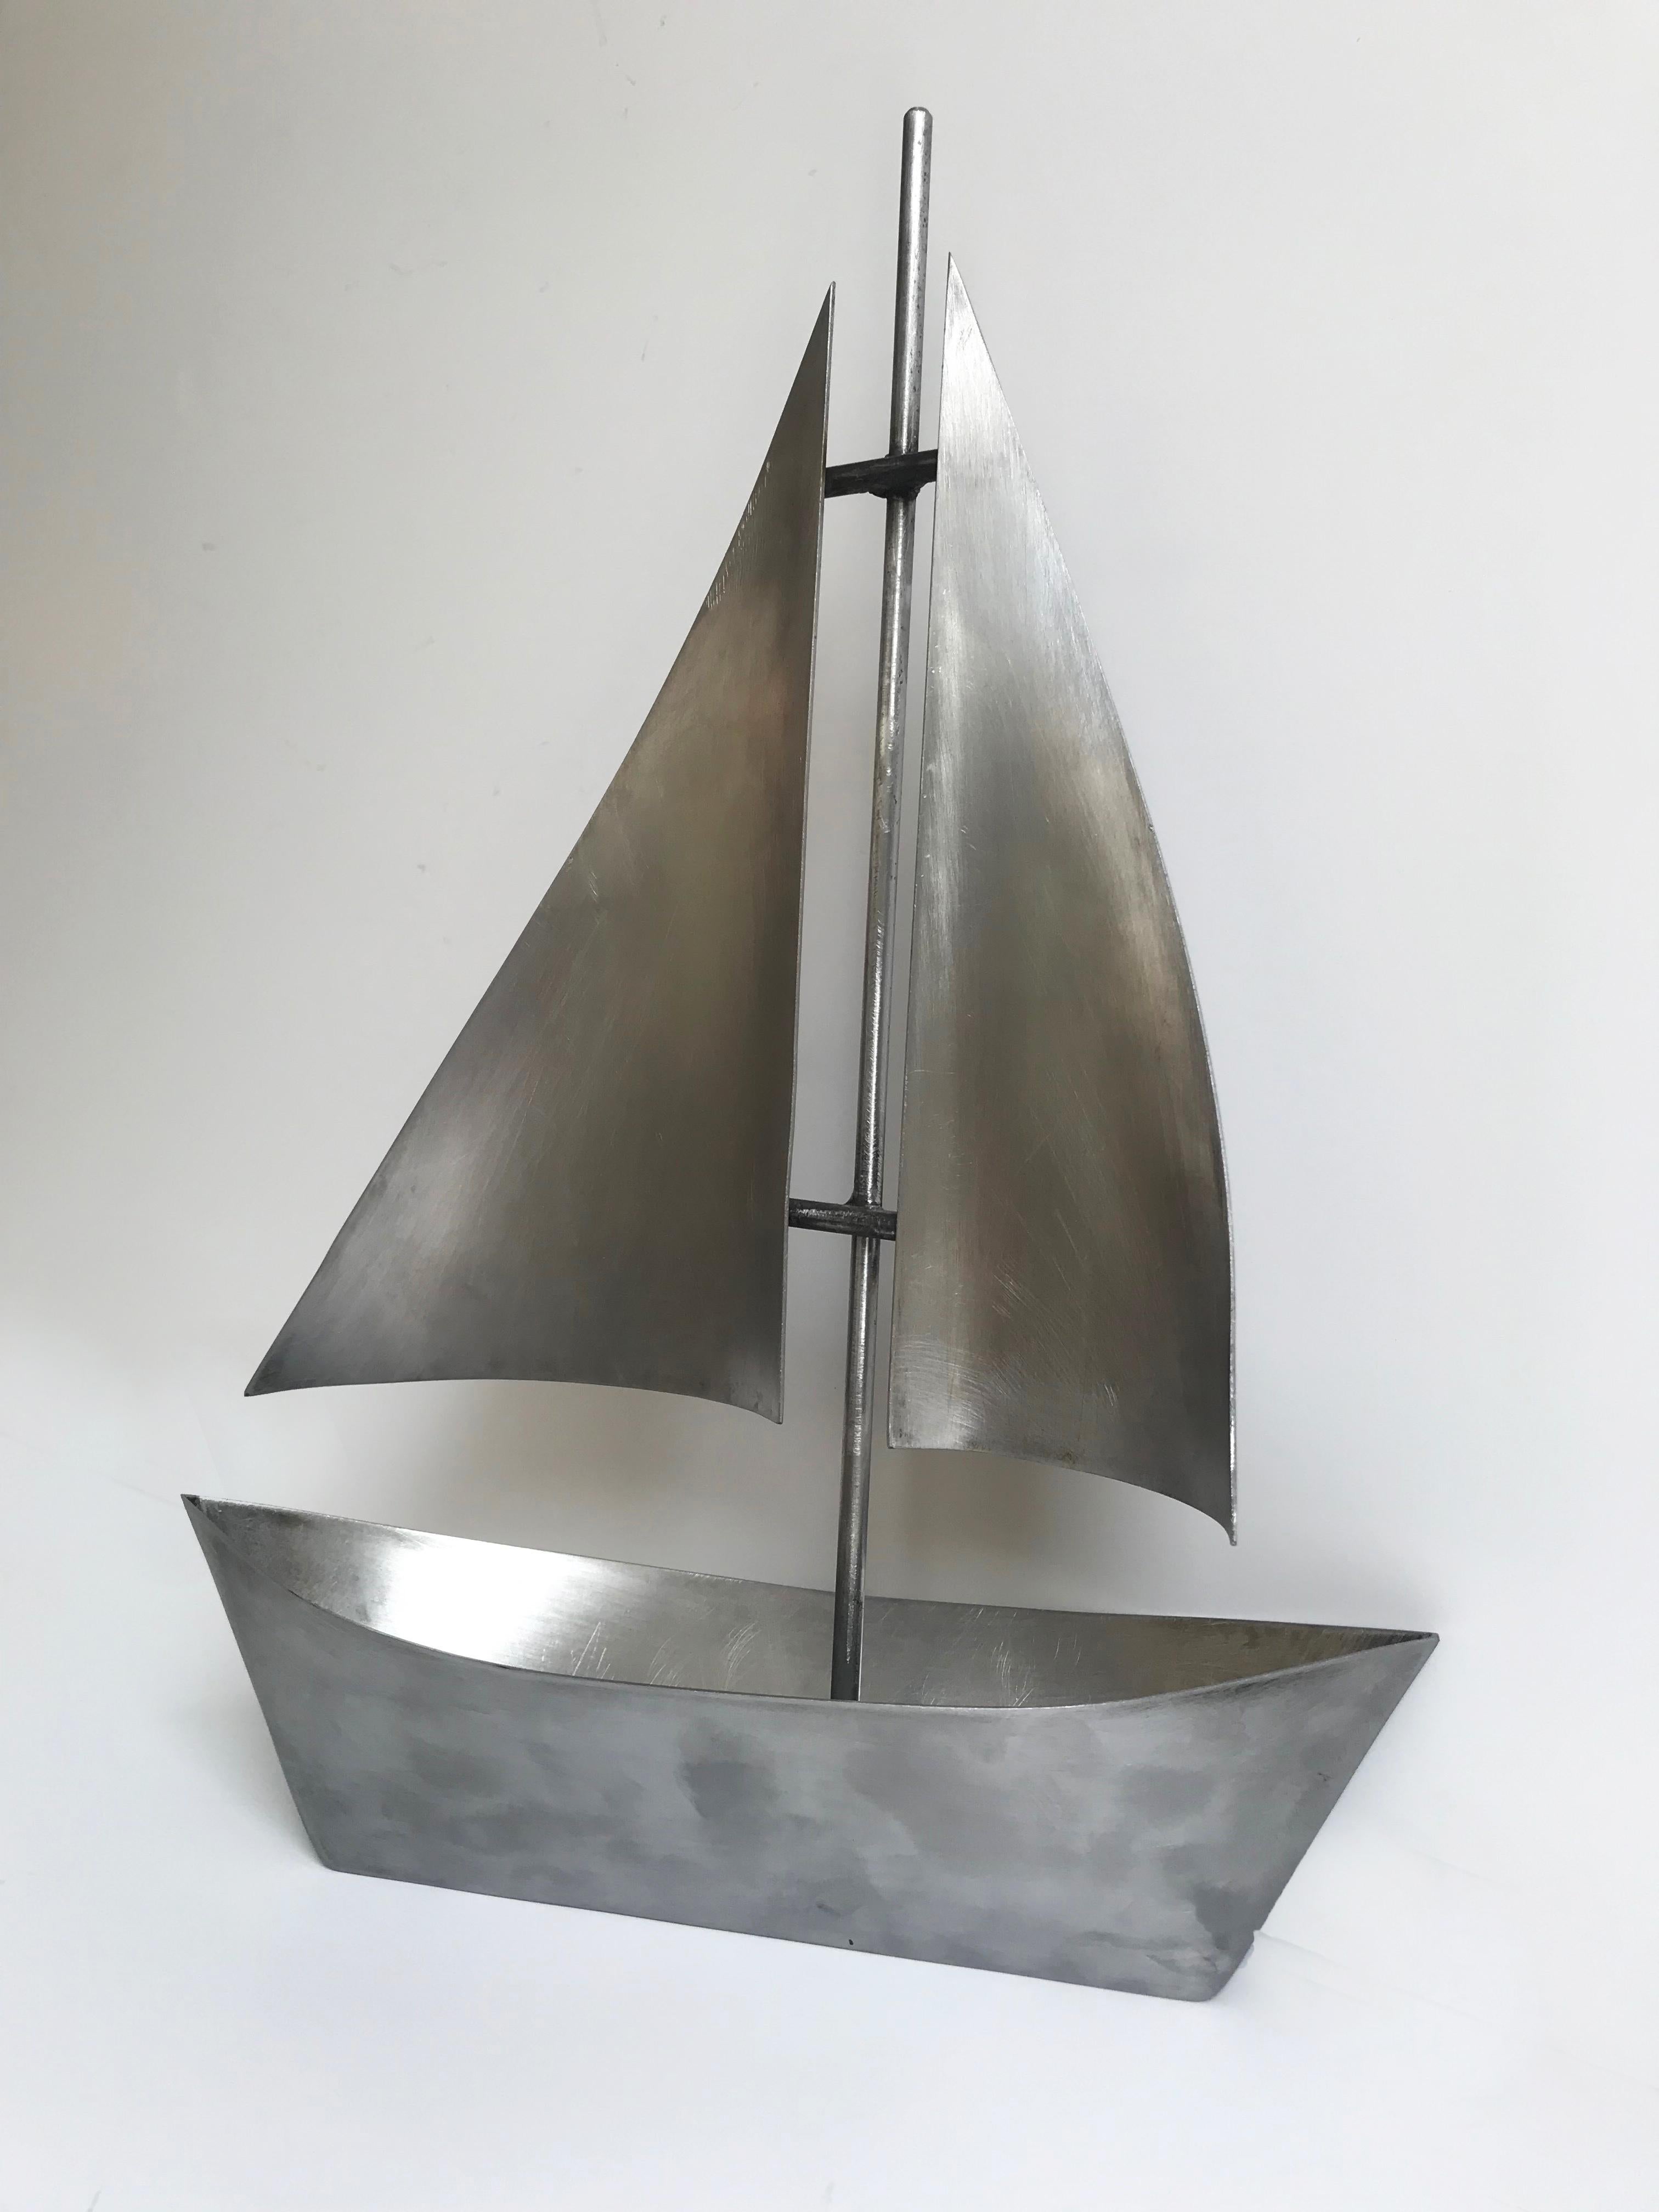 metal boat sculpture